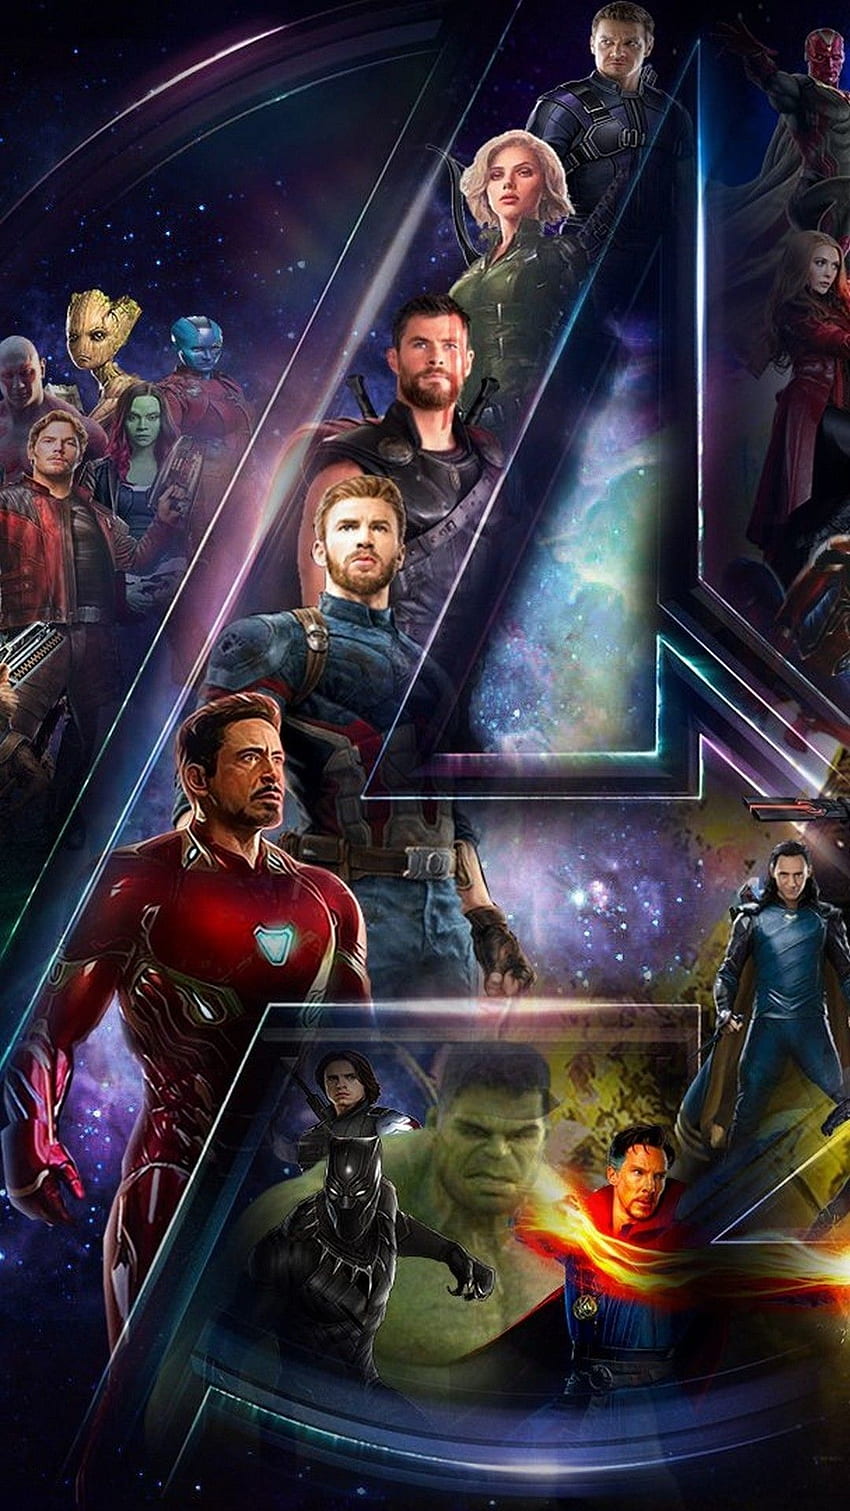 Download Mega Collection of Cool iPhone Wallpapers  Avengers wallpaper  Captain america Superhero wallpaper